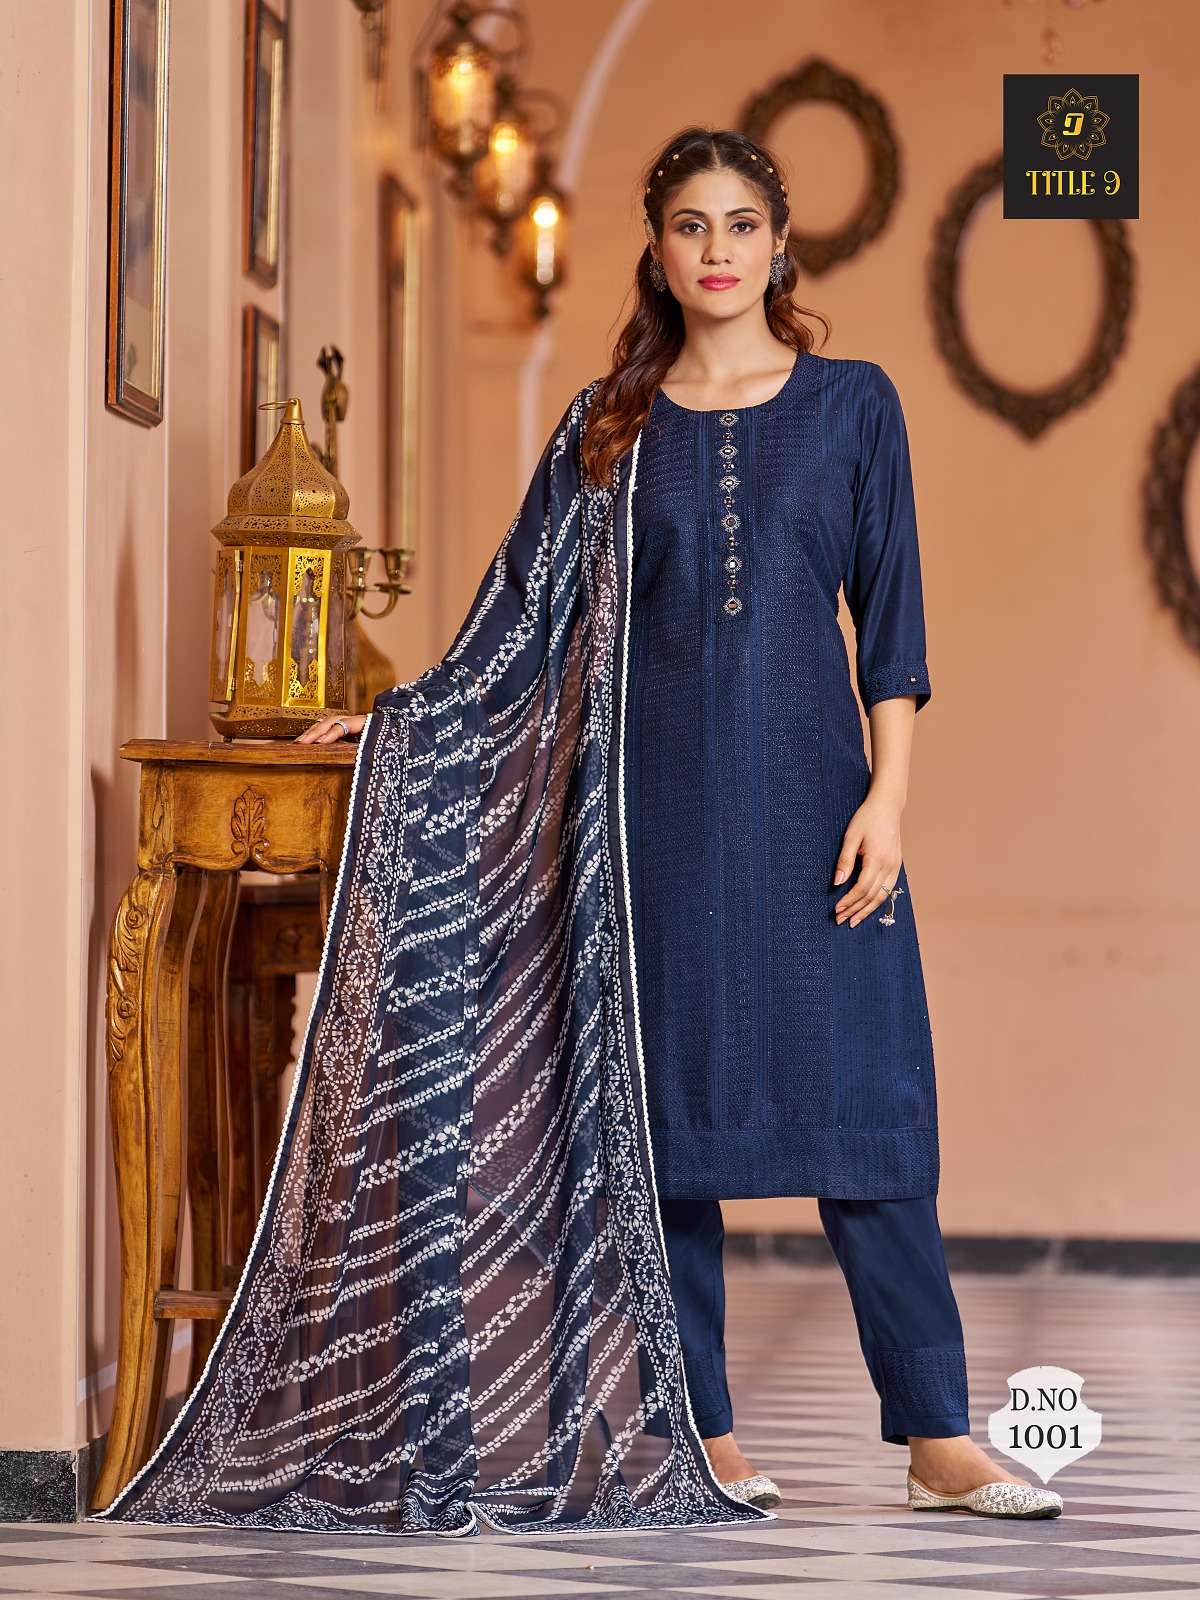 Vaishali Suits 5501 to 5516 Series Camila Crepe Suits wholesale Export